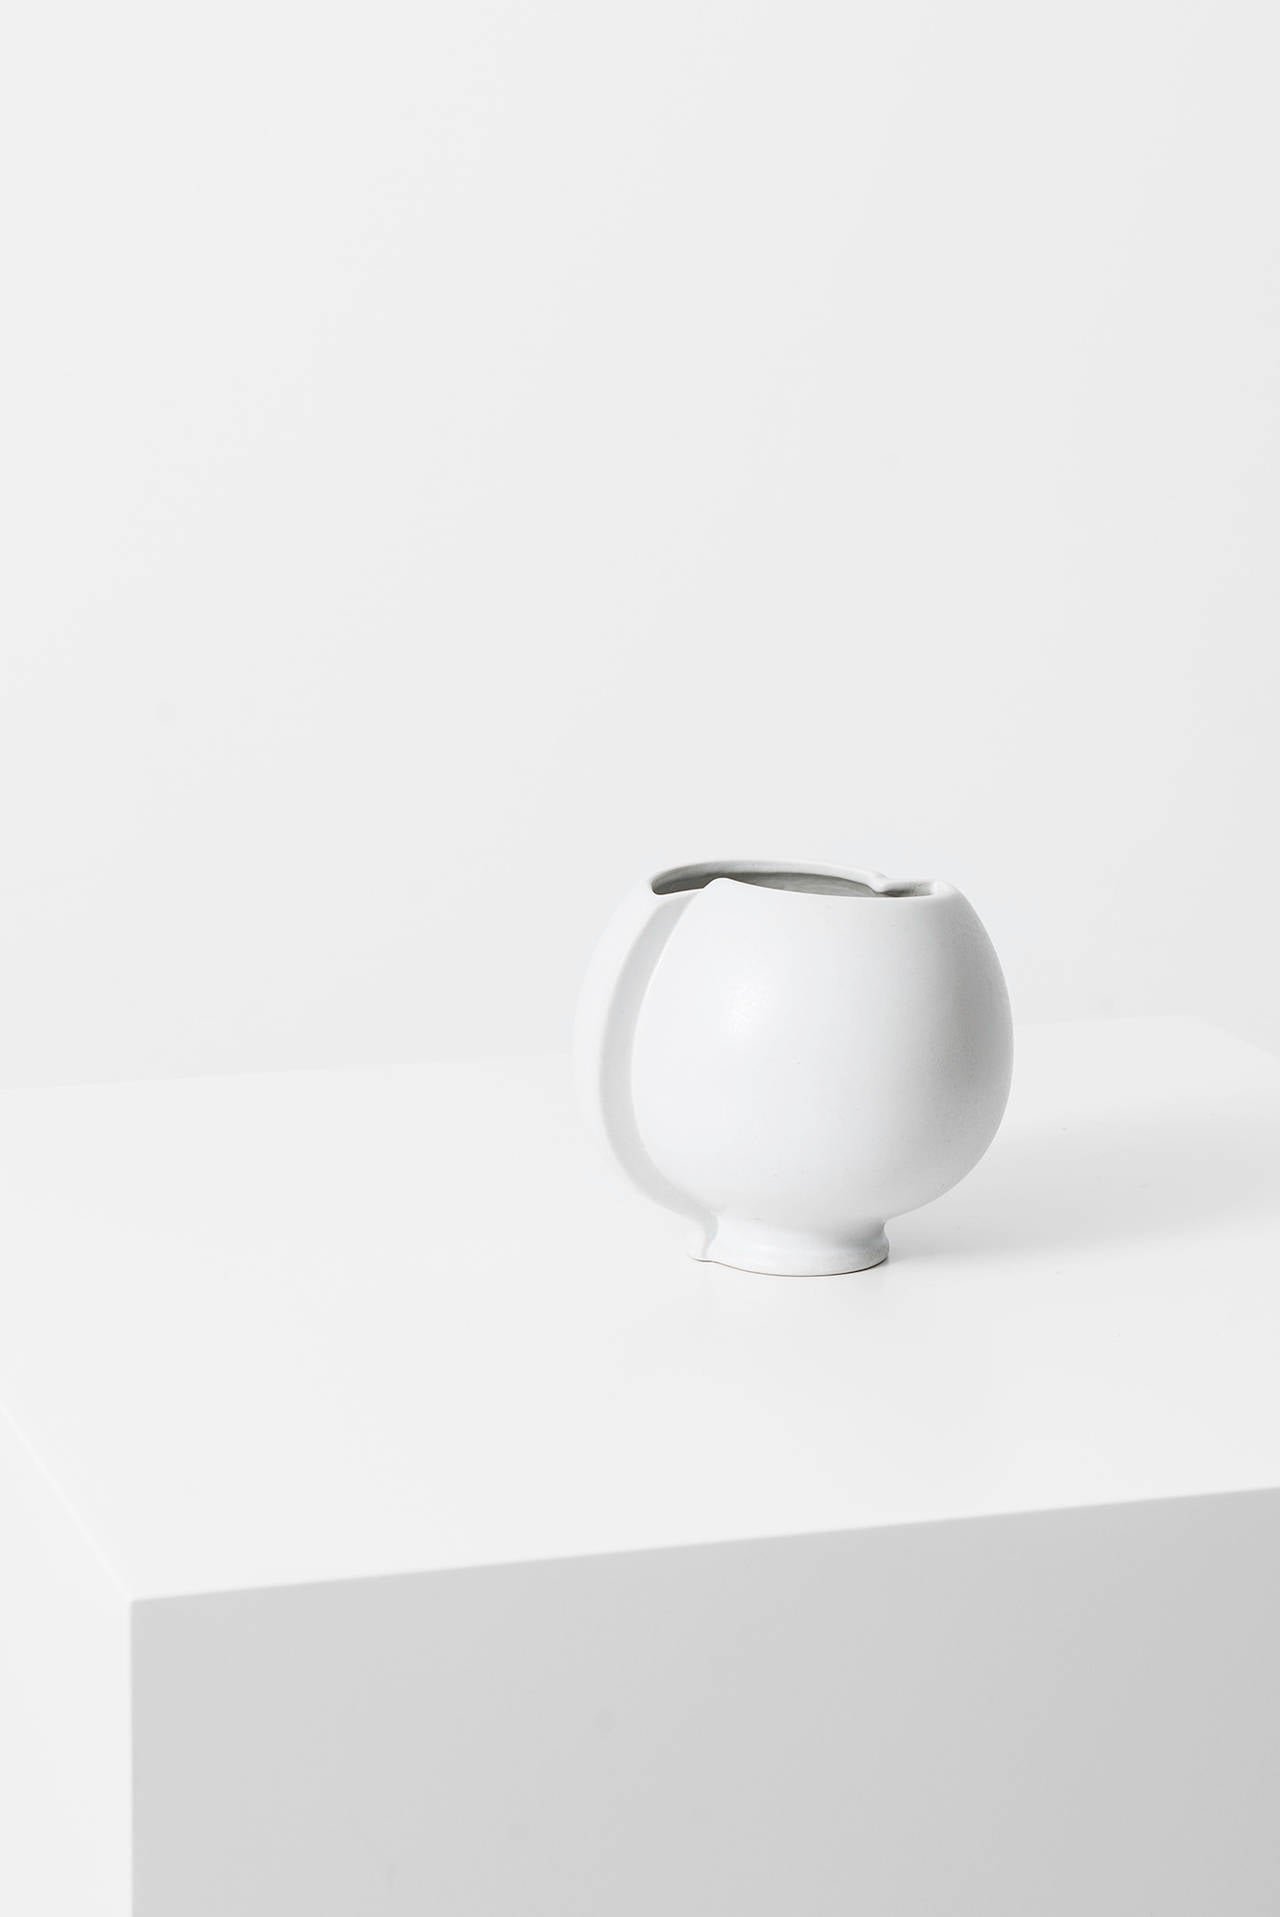 Swedish Wilhelm Kåge Ceramic Vase Model Surrea by Gustavsberg in Sweden